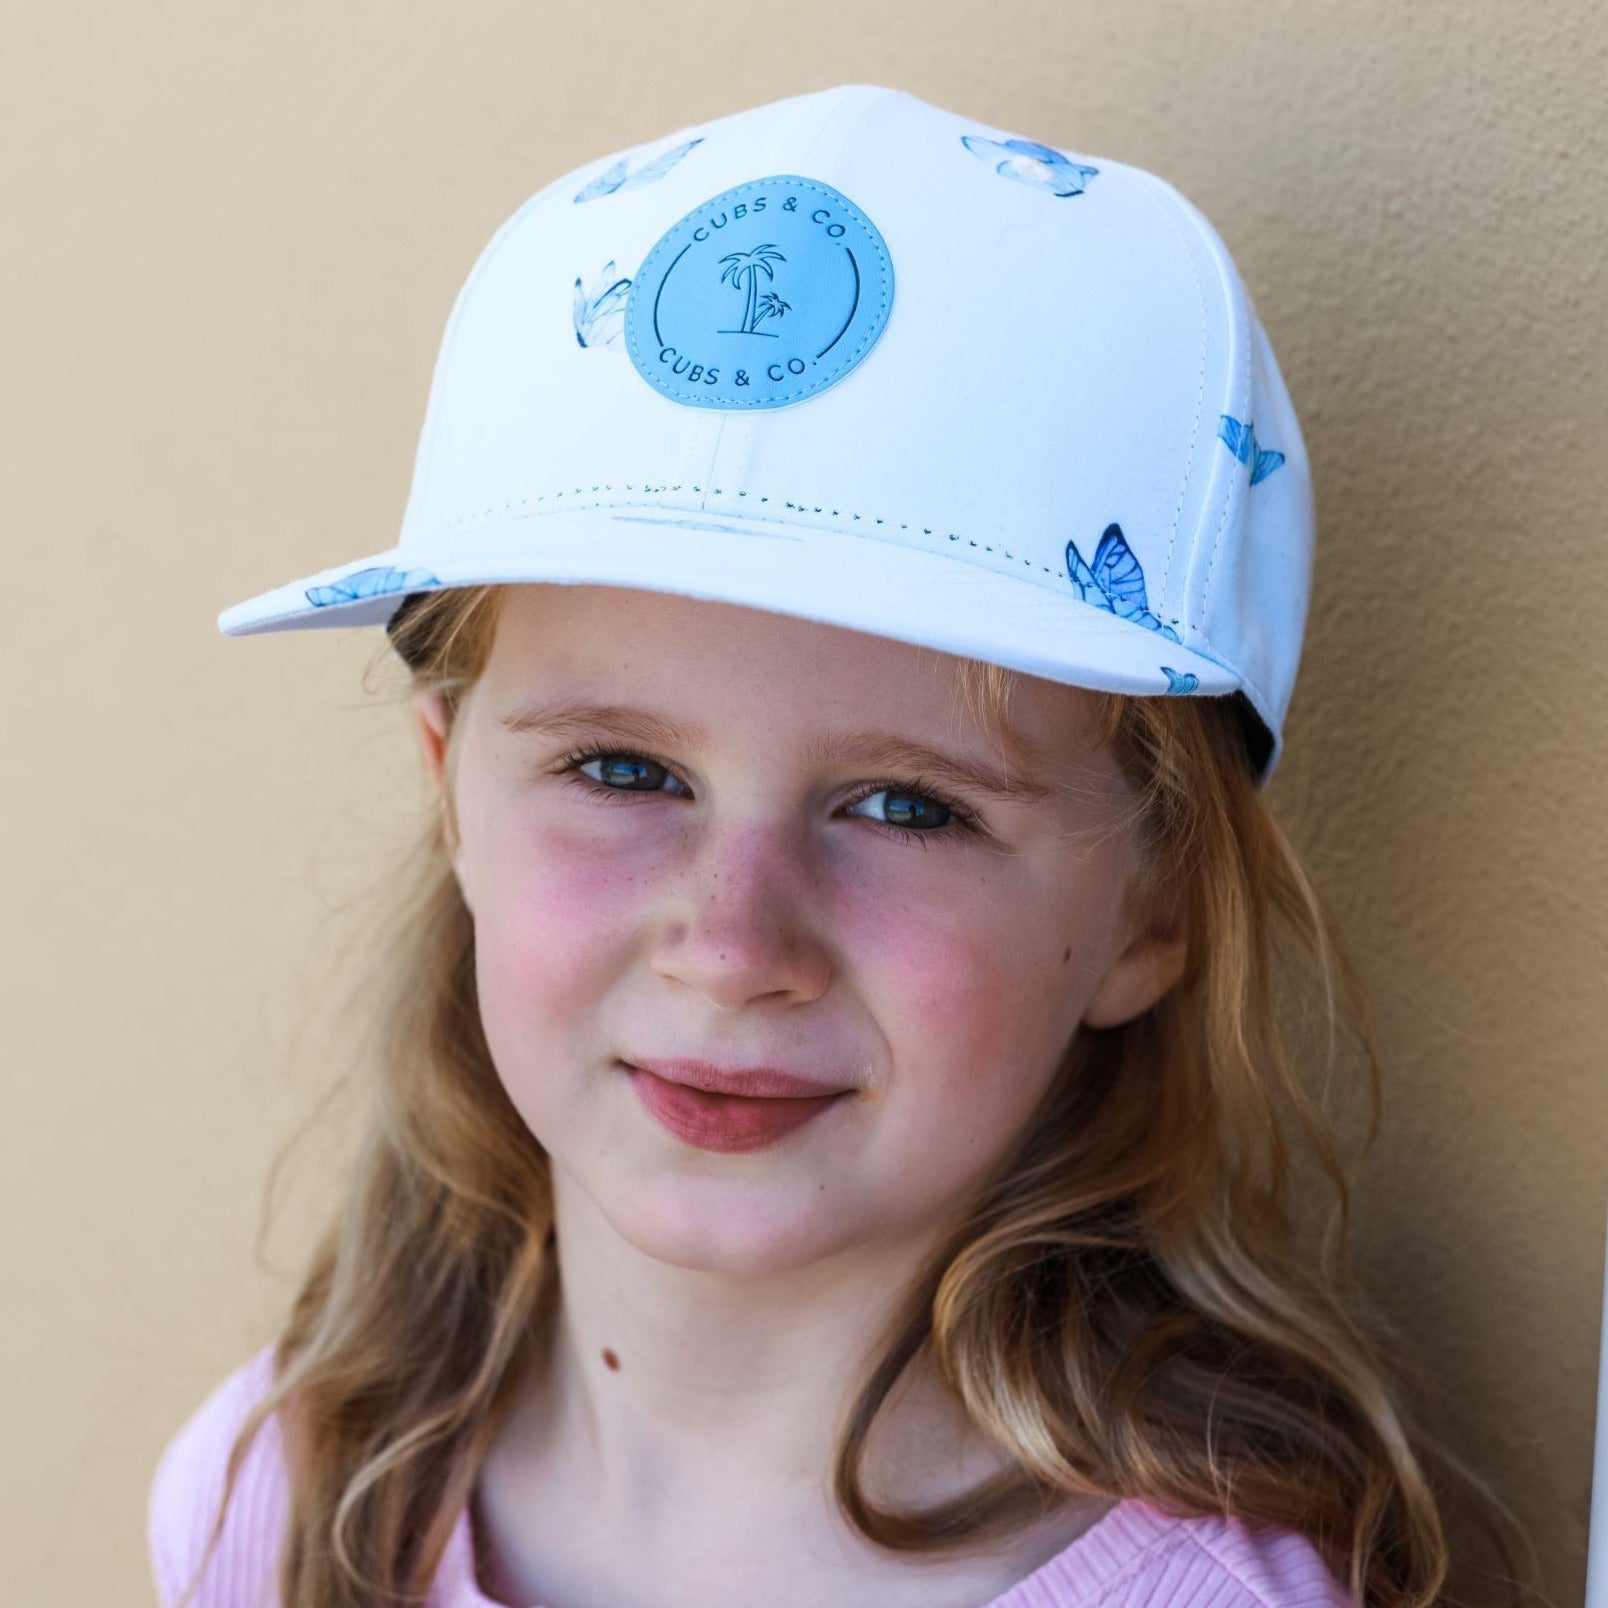 Girl wearing a blue butterfly snapback baseball cap. Cubs & Co. Australia